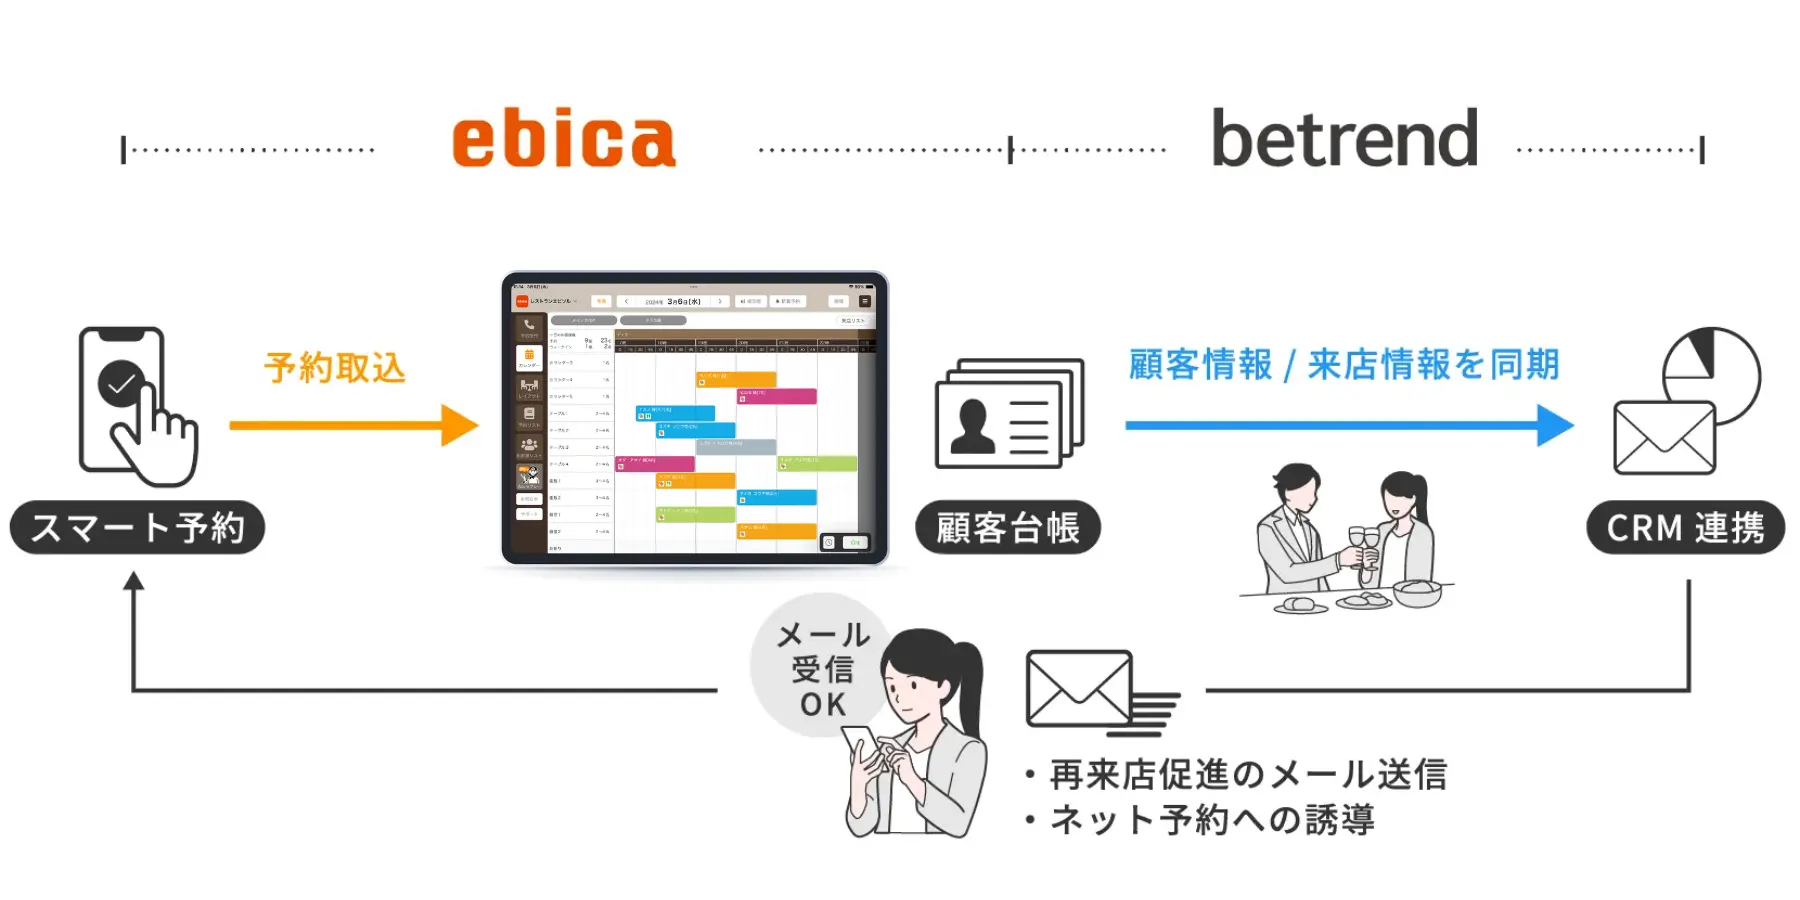 「betrend」×「ebica」連携でお客様にメールでリピーター予約獲得